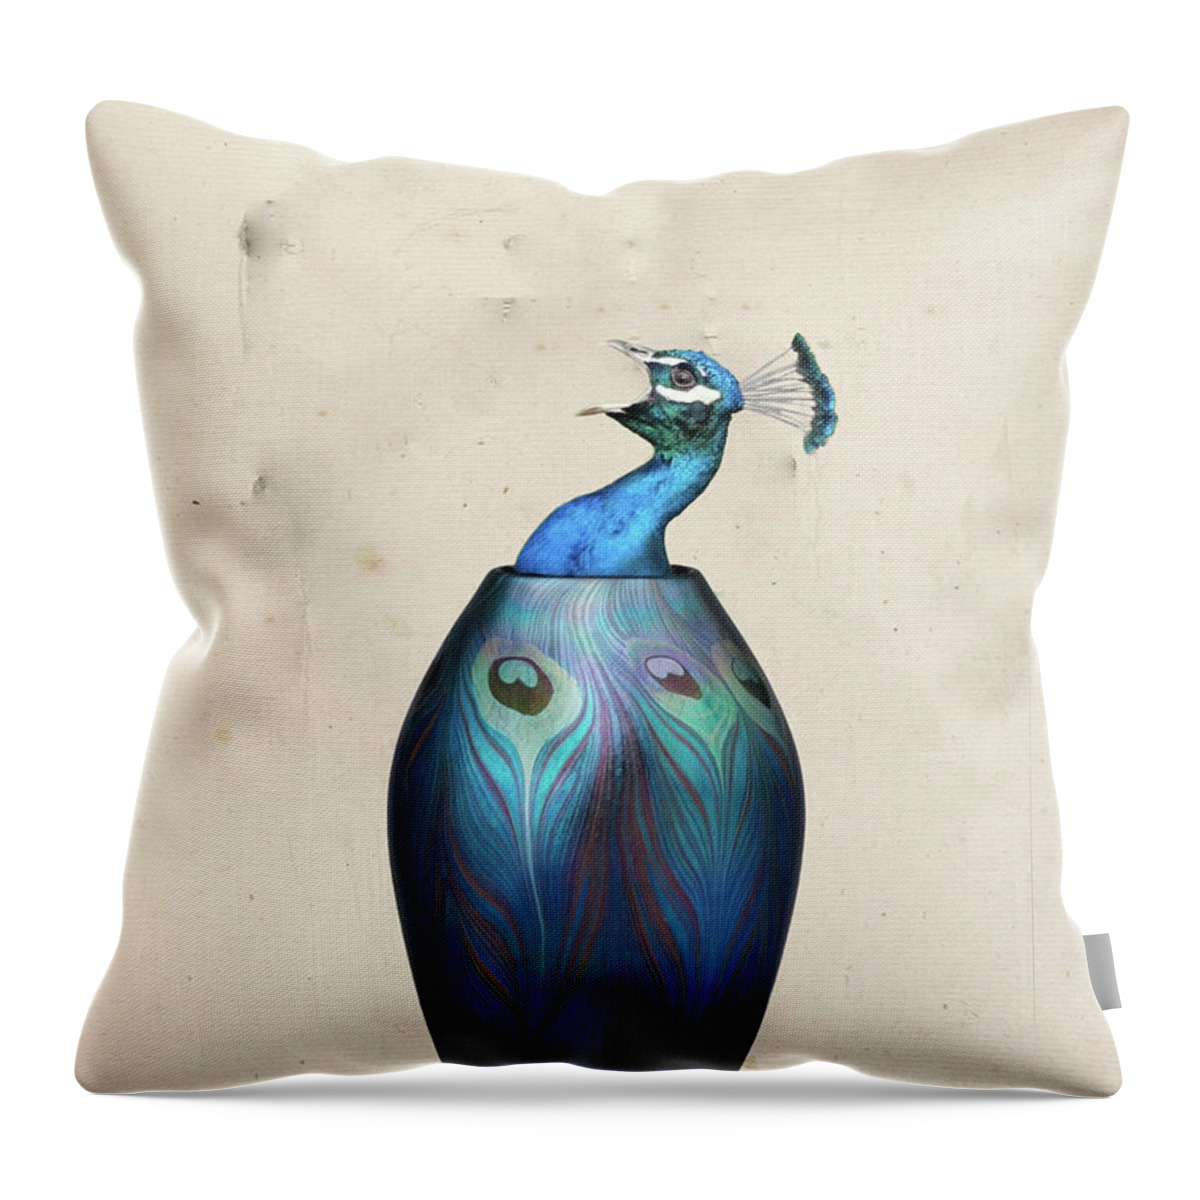 Vase Throw Pillow featuring the digital art Peacock vase by Keshava Shukla